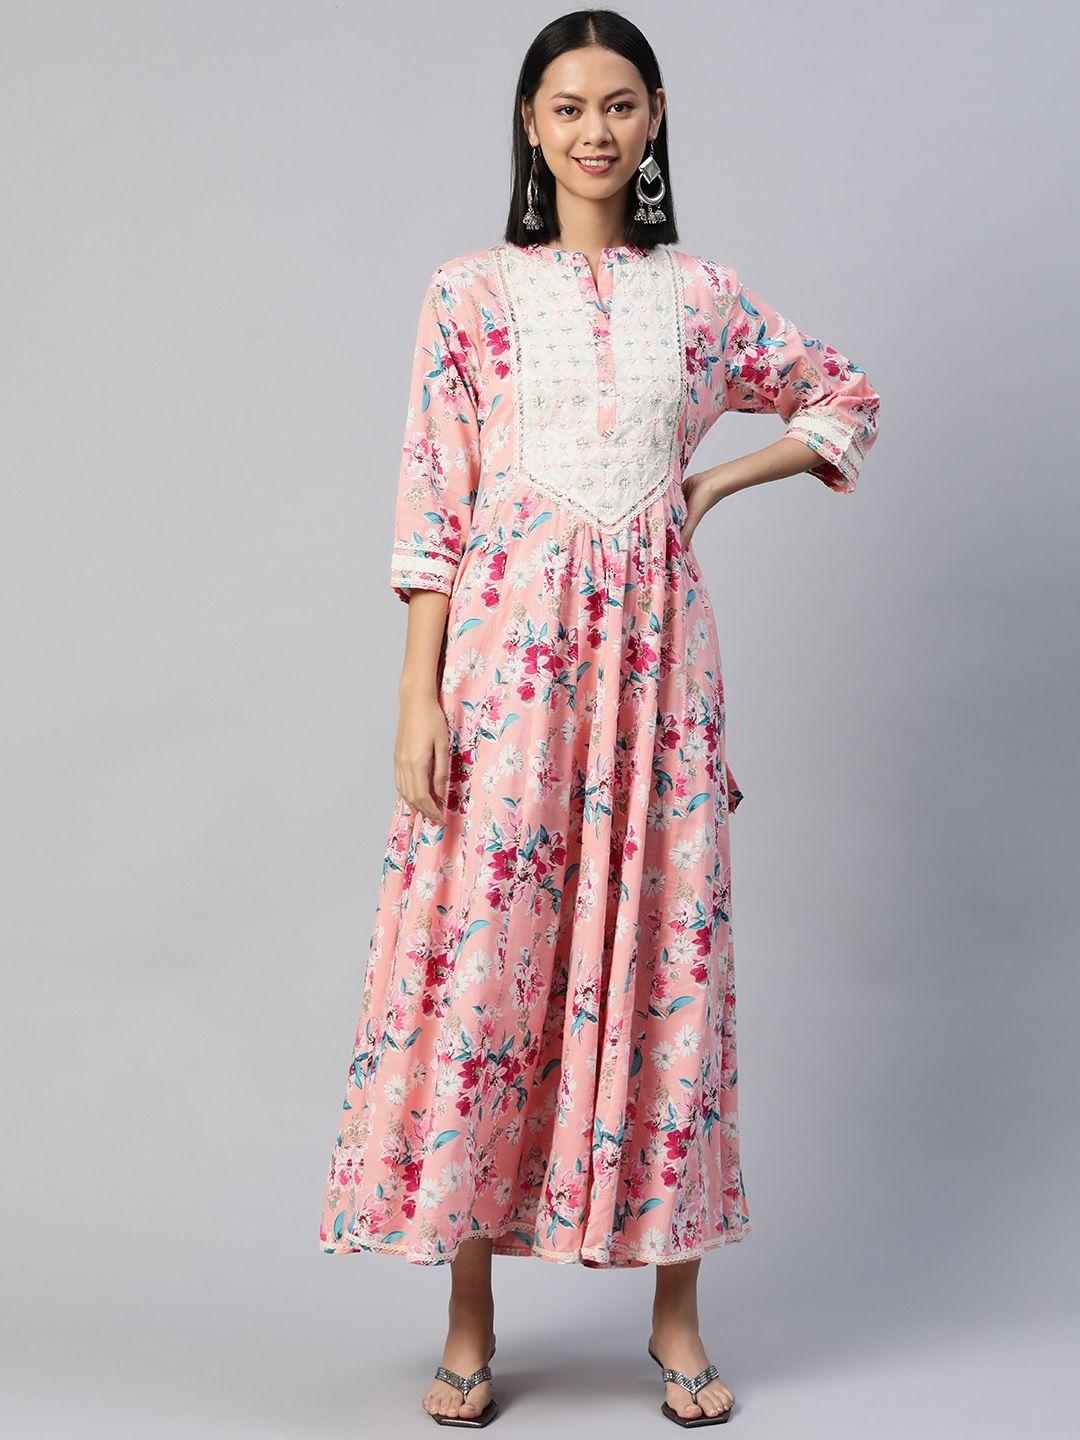 readiprint fashions floral ethnic a-line maxi dress